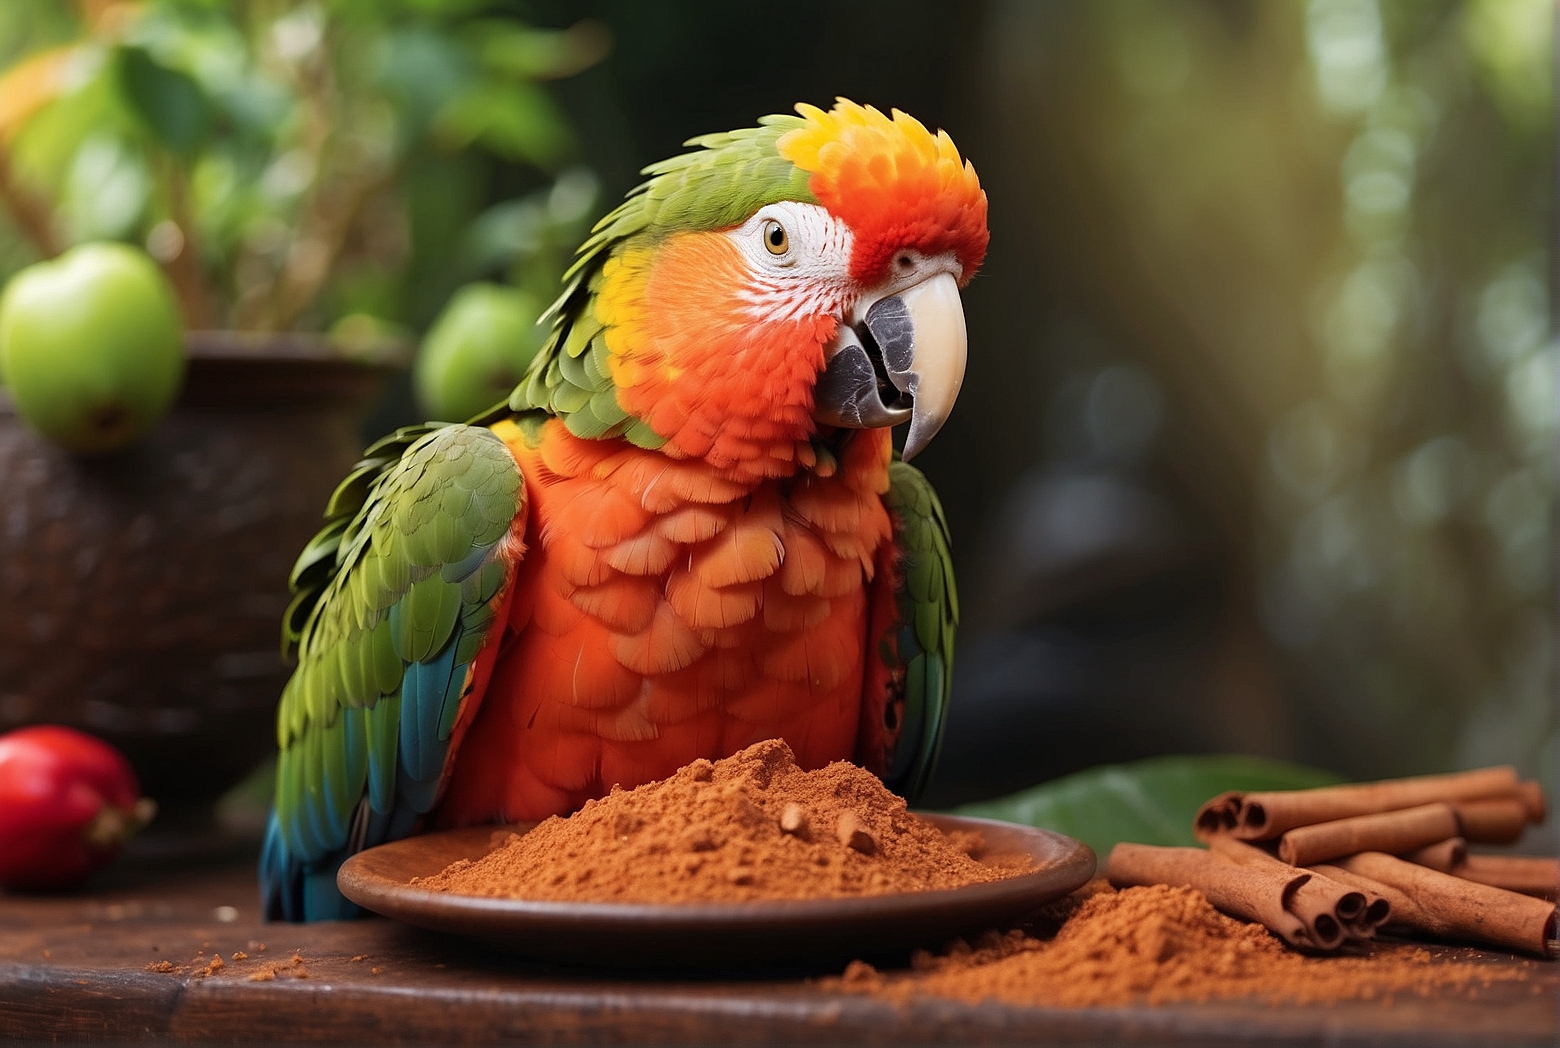 Can Parrots Enjoy Cinnamon?